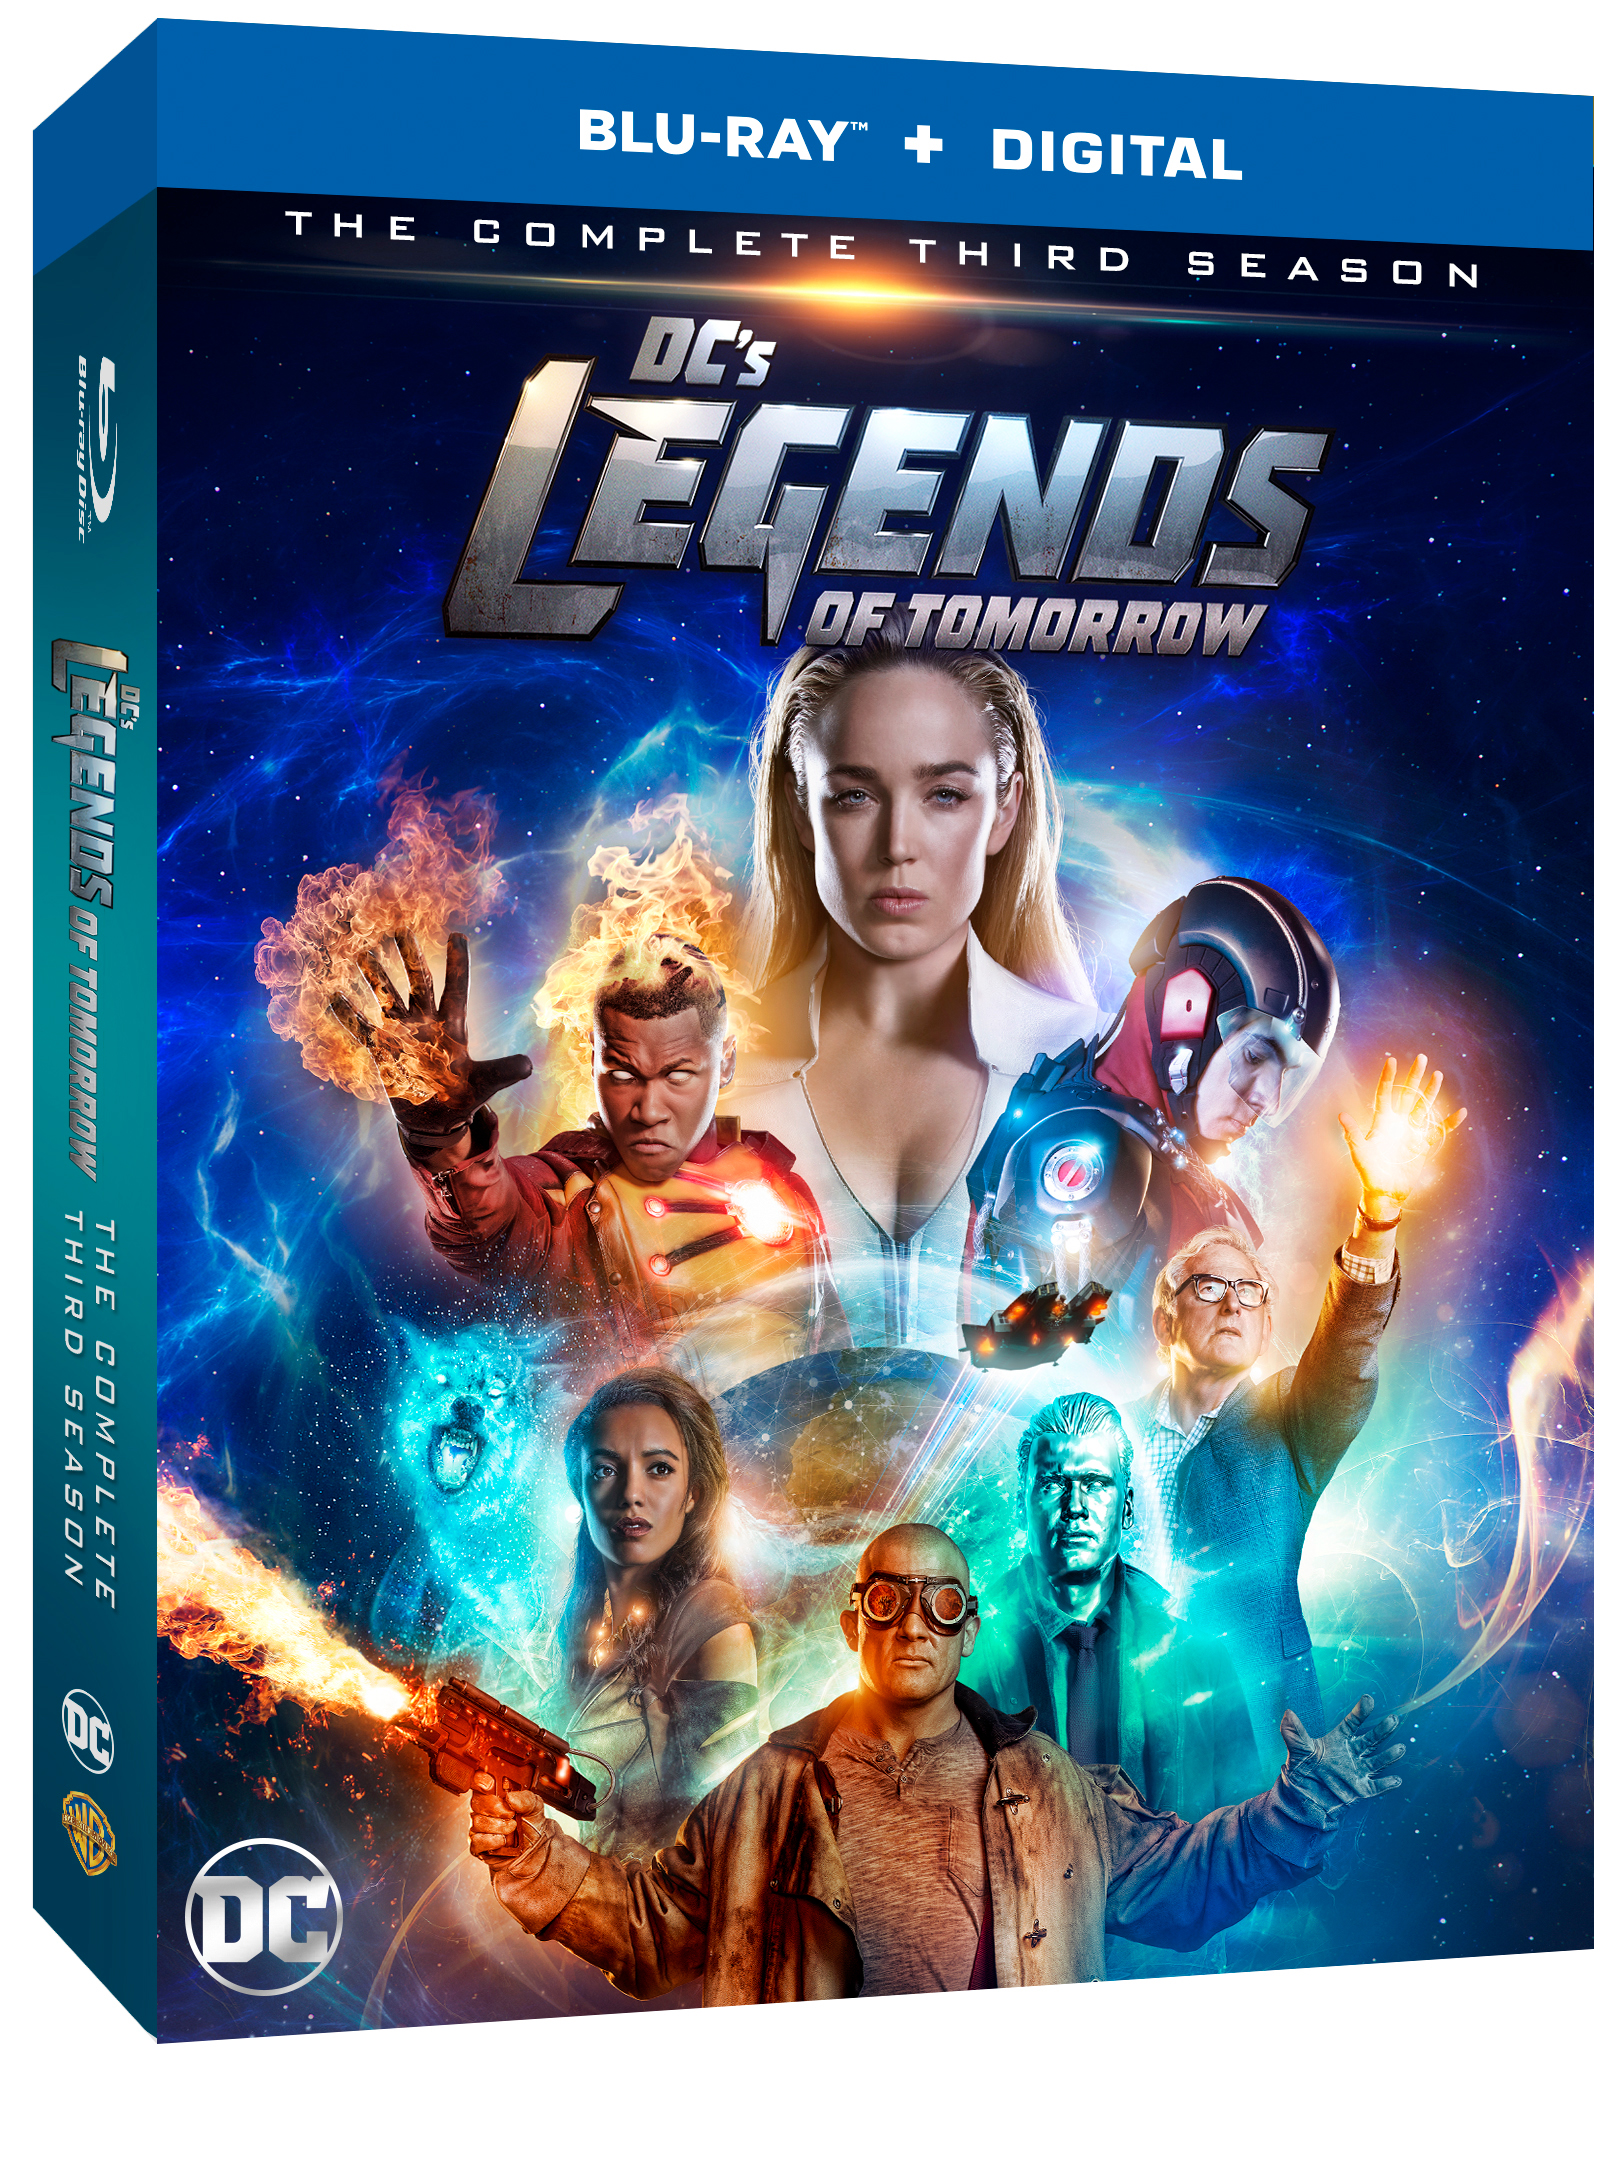 DC's Legends of Tomorrow Season 3 Blu-ray DVD release